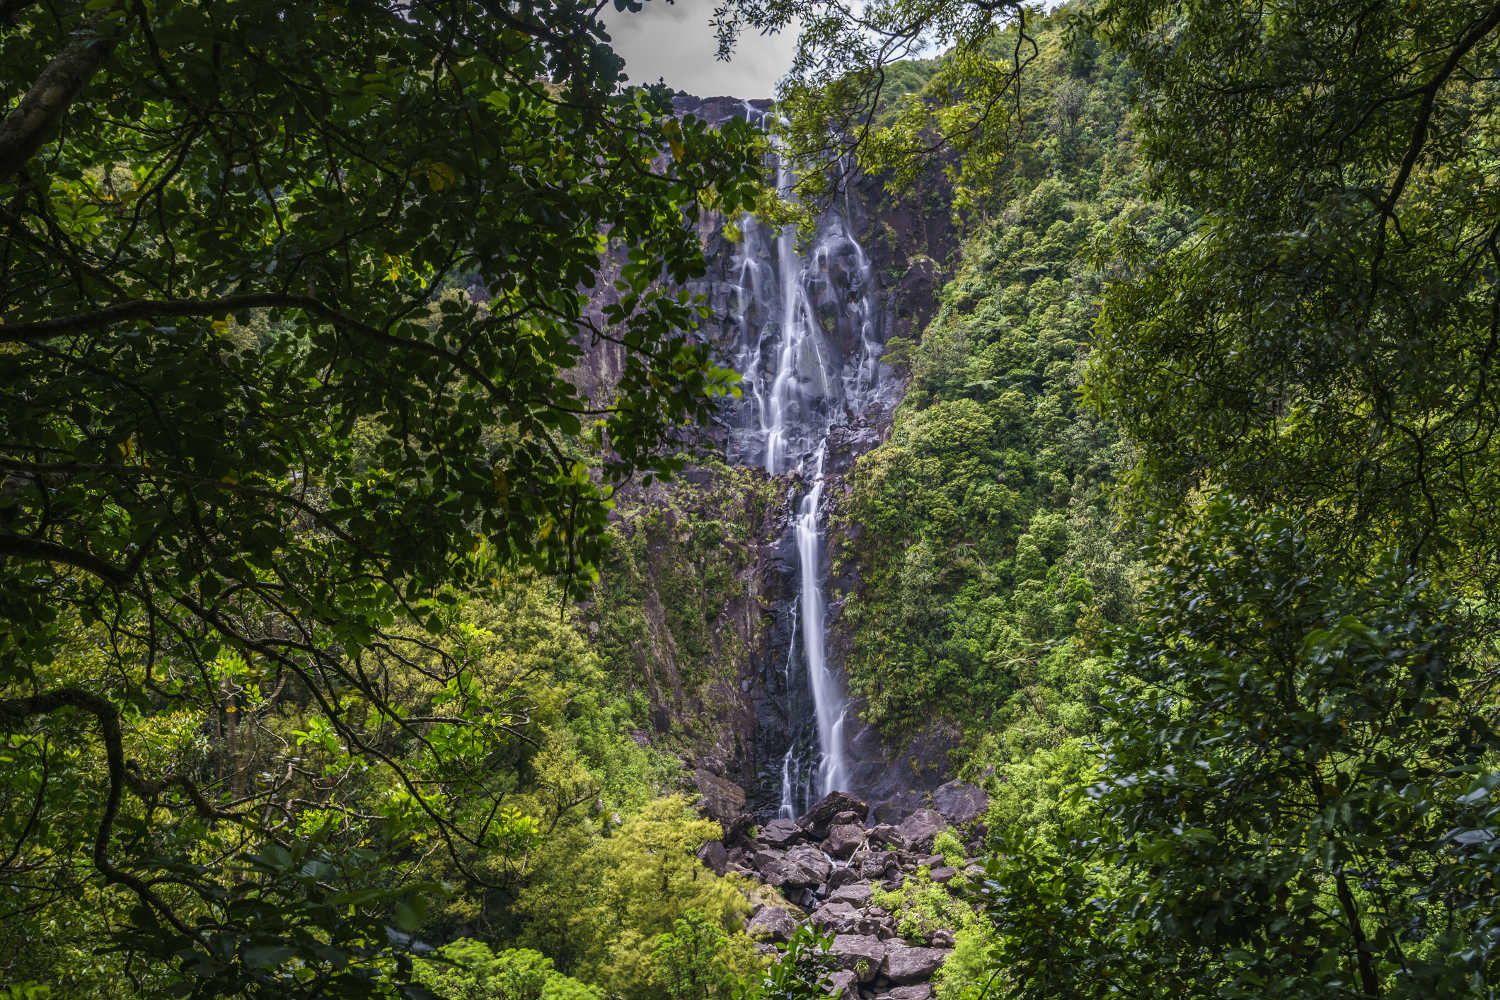 Wairere falls, waterfalls in a forest, Bay of Plenty, Kaimai Mamaku, new zealand